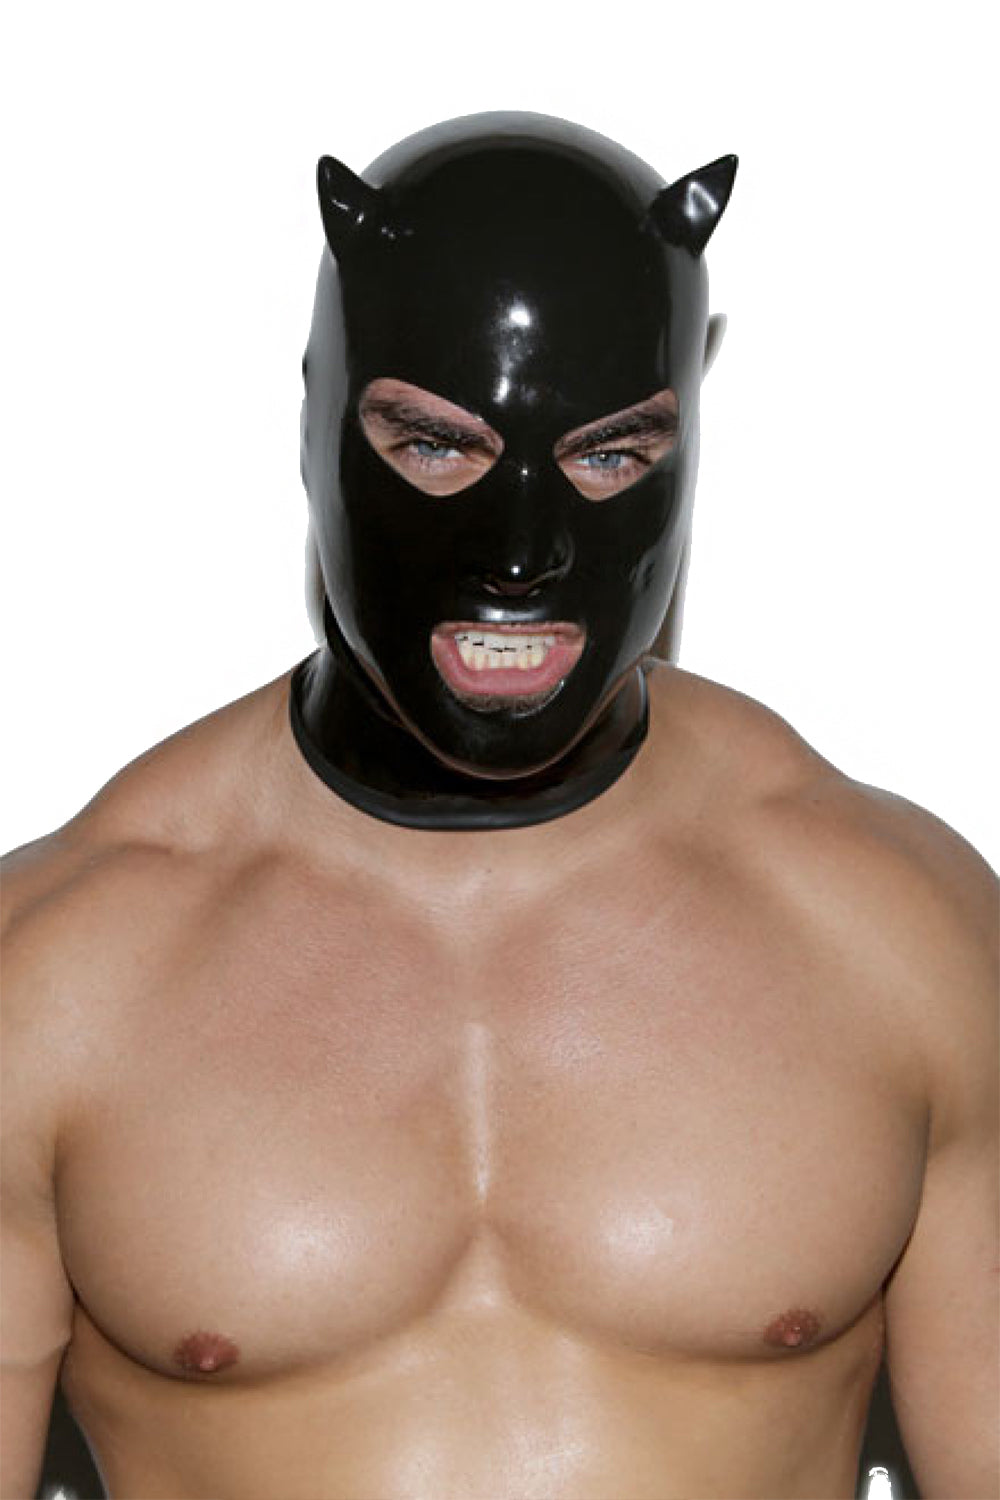 Limited Edition Black Devil Latex Mask - Slick It Up 